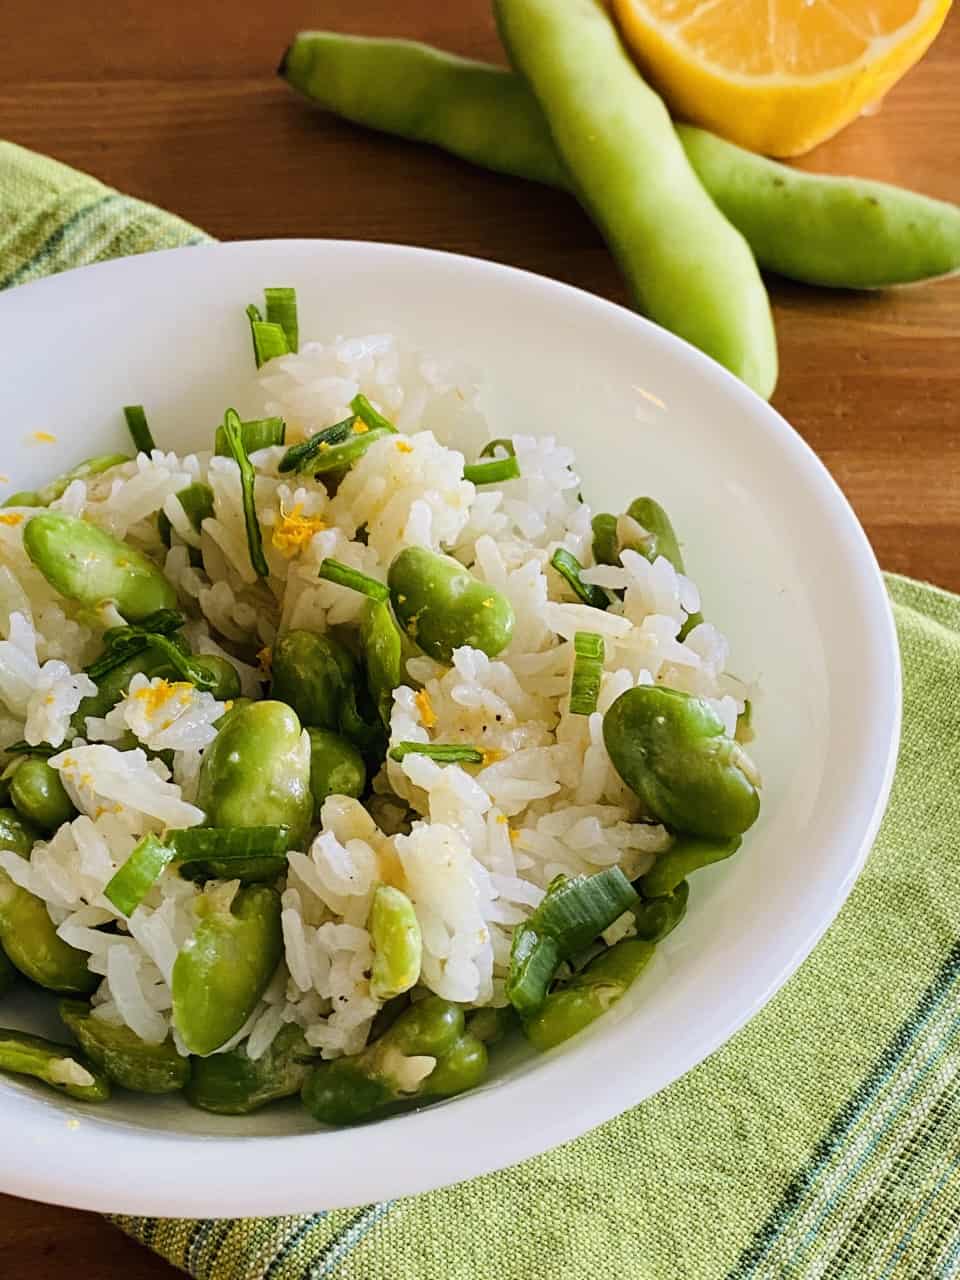 Rice and Fava Beans Salad with Lemon Vinaigrette